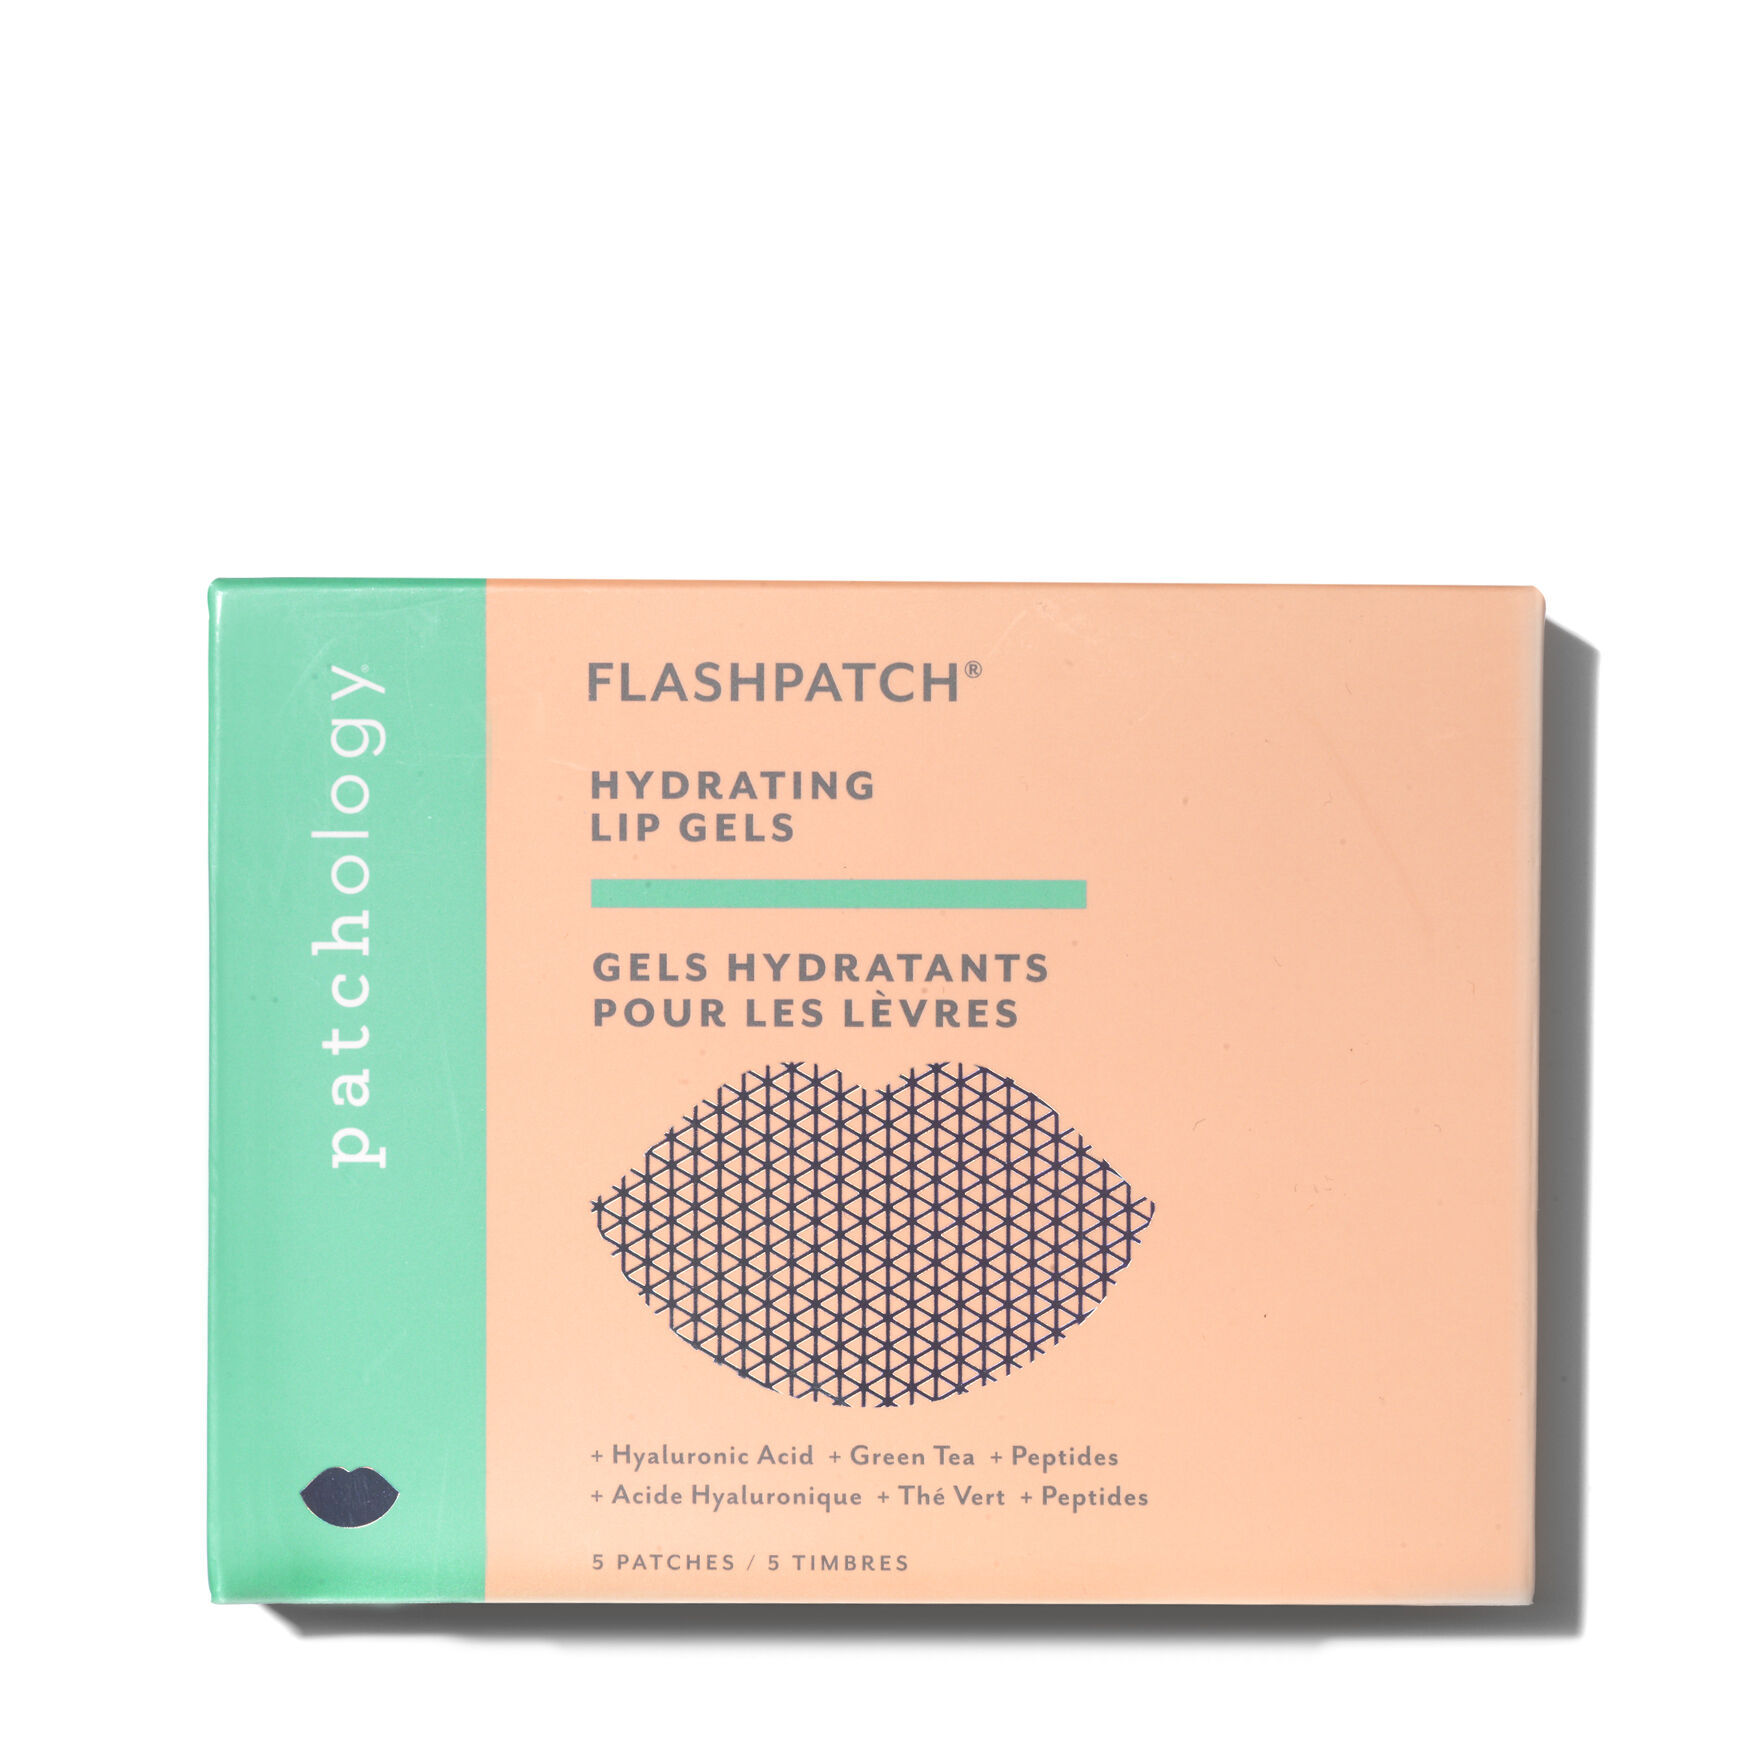 Patchology - Flashpatch Hydrating Lip Gels by Patchology